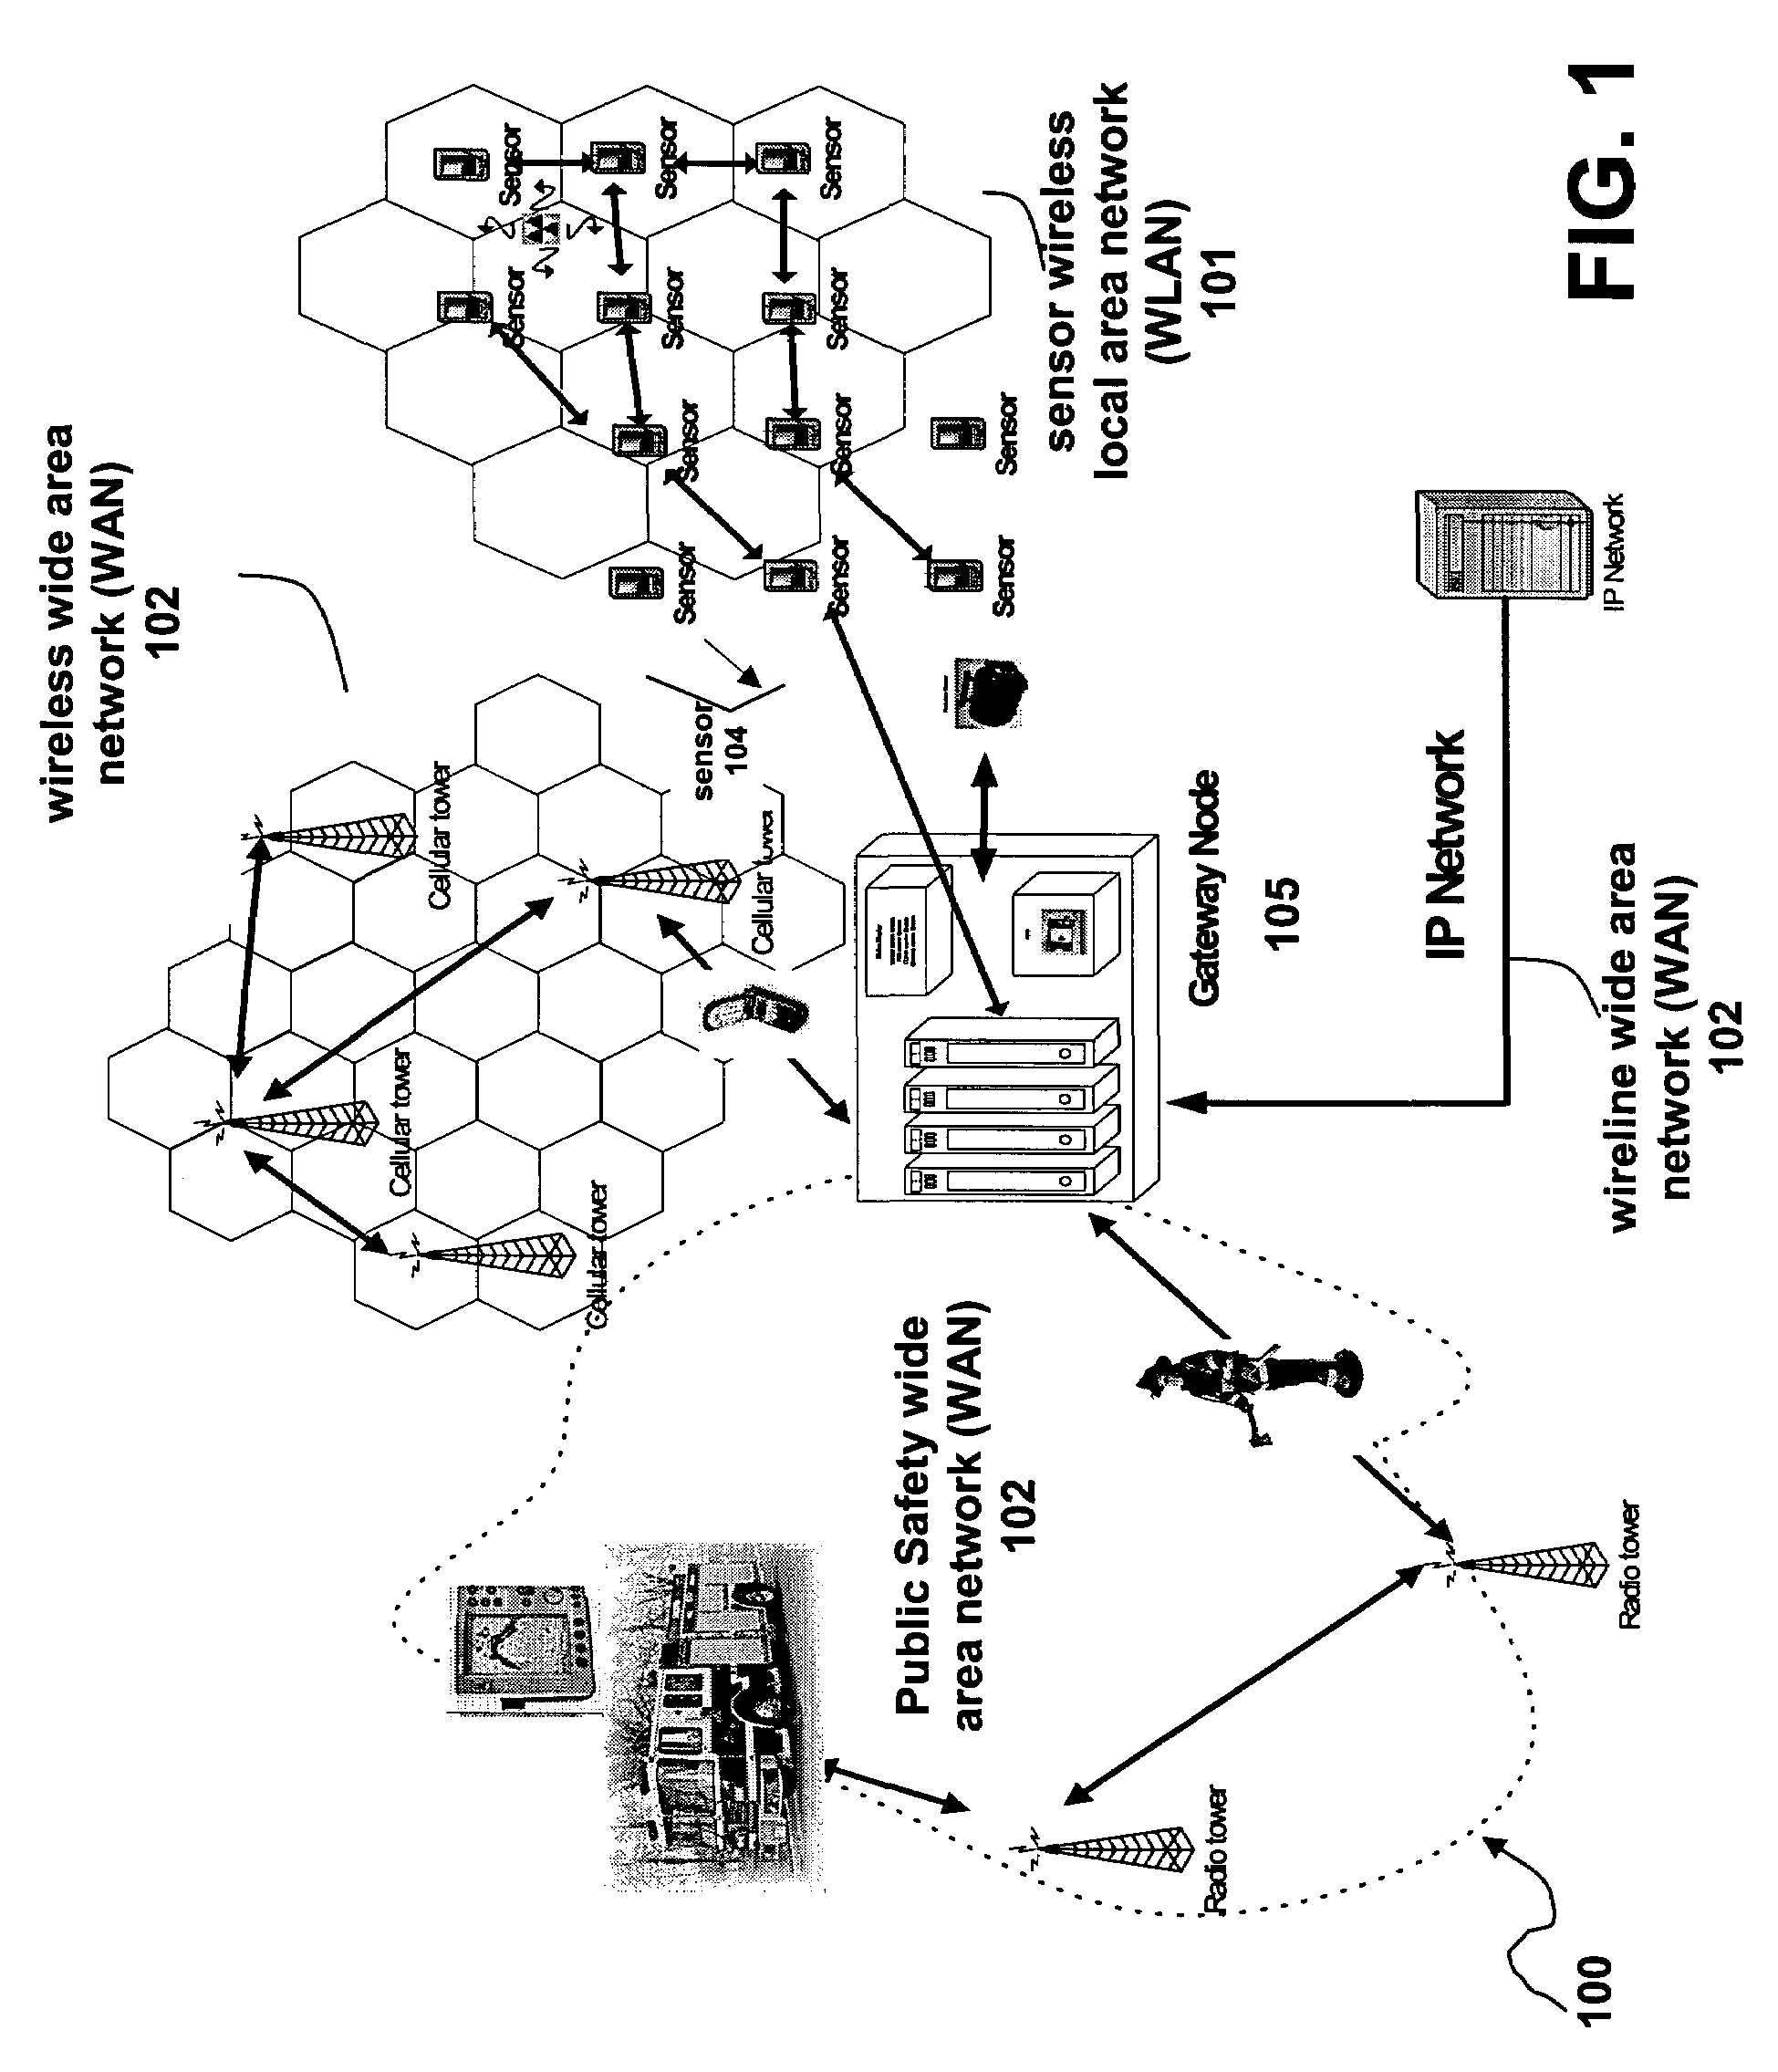 Method and apparatus for multi-waveform wireless sensor network